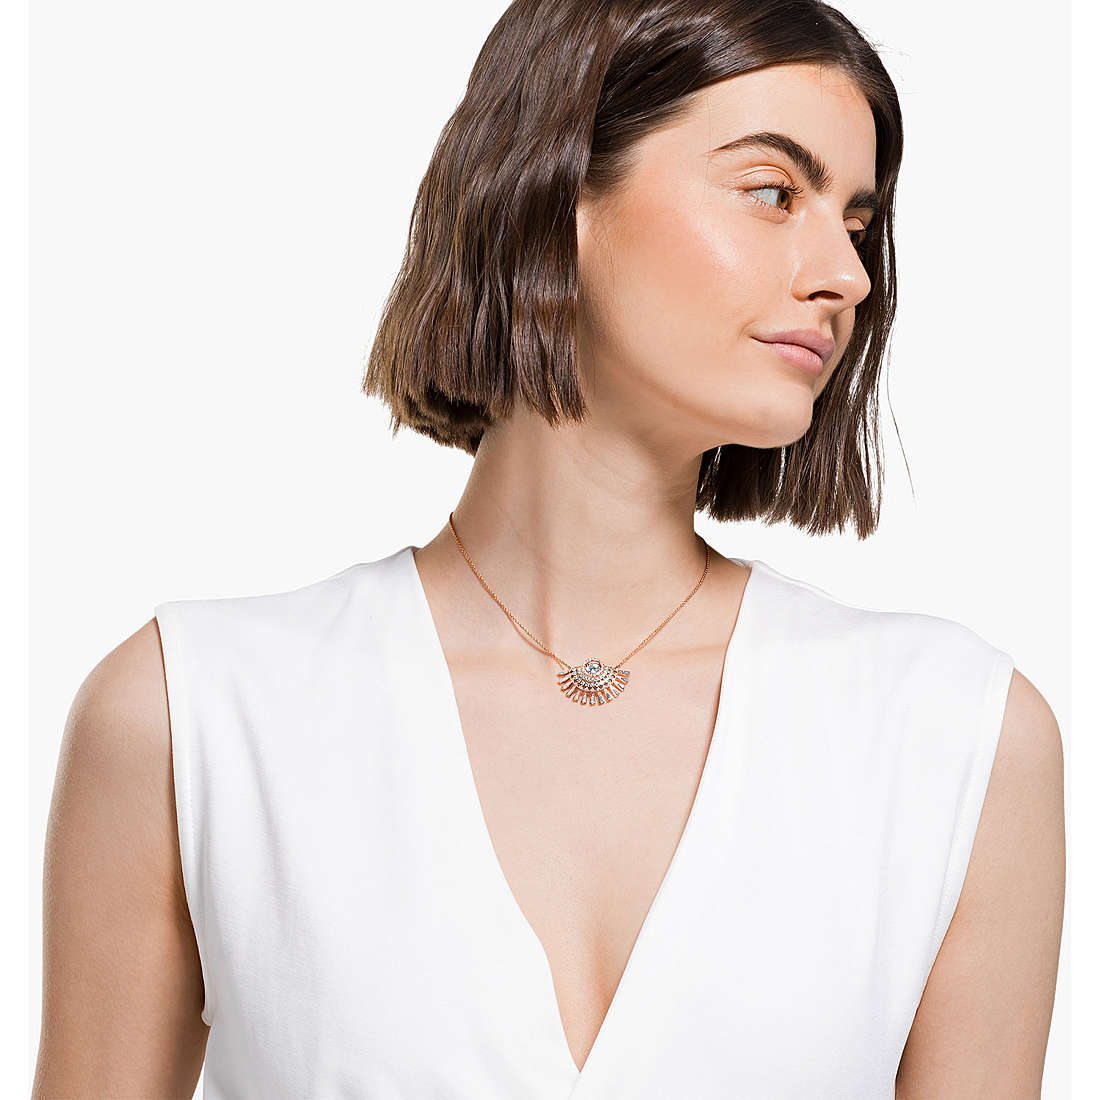 Swarovski necklaces Sparkling woman 5578116 wearing